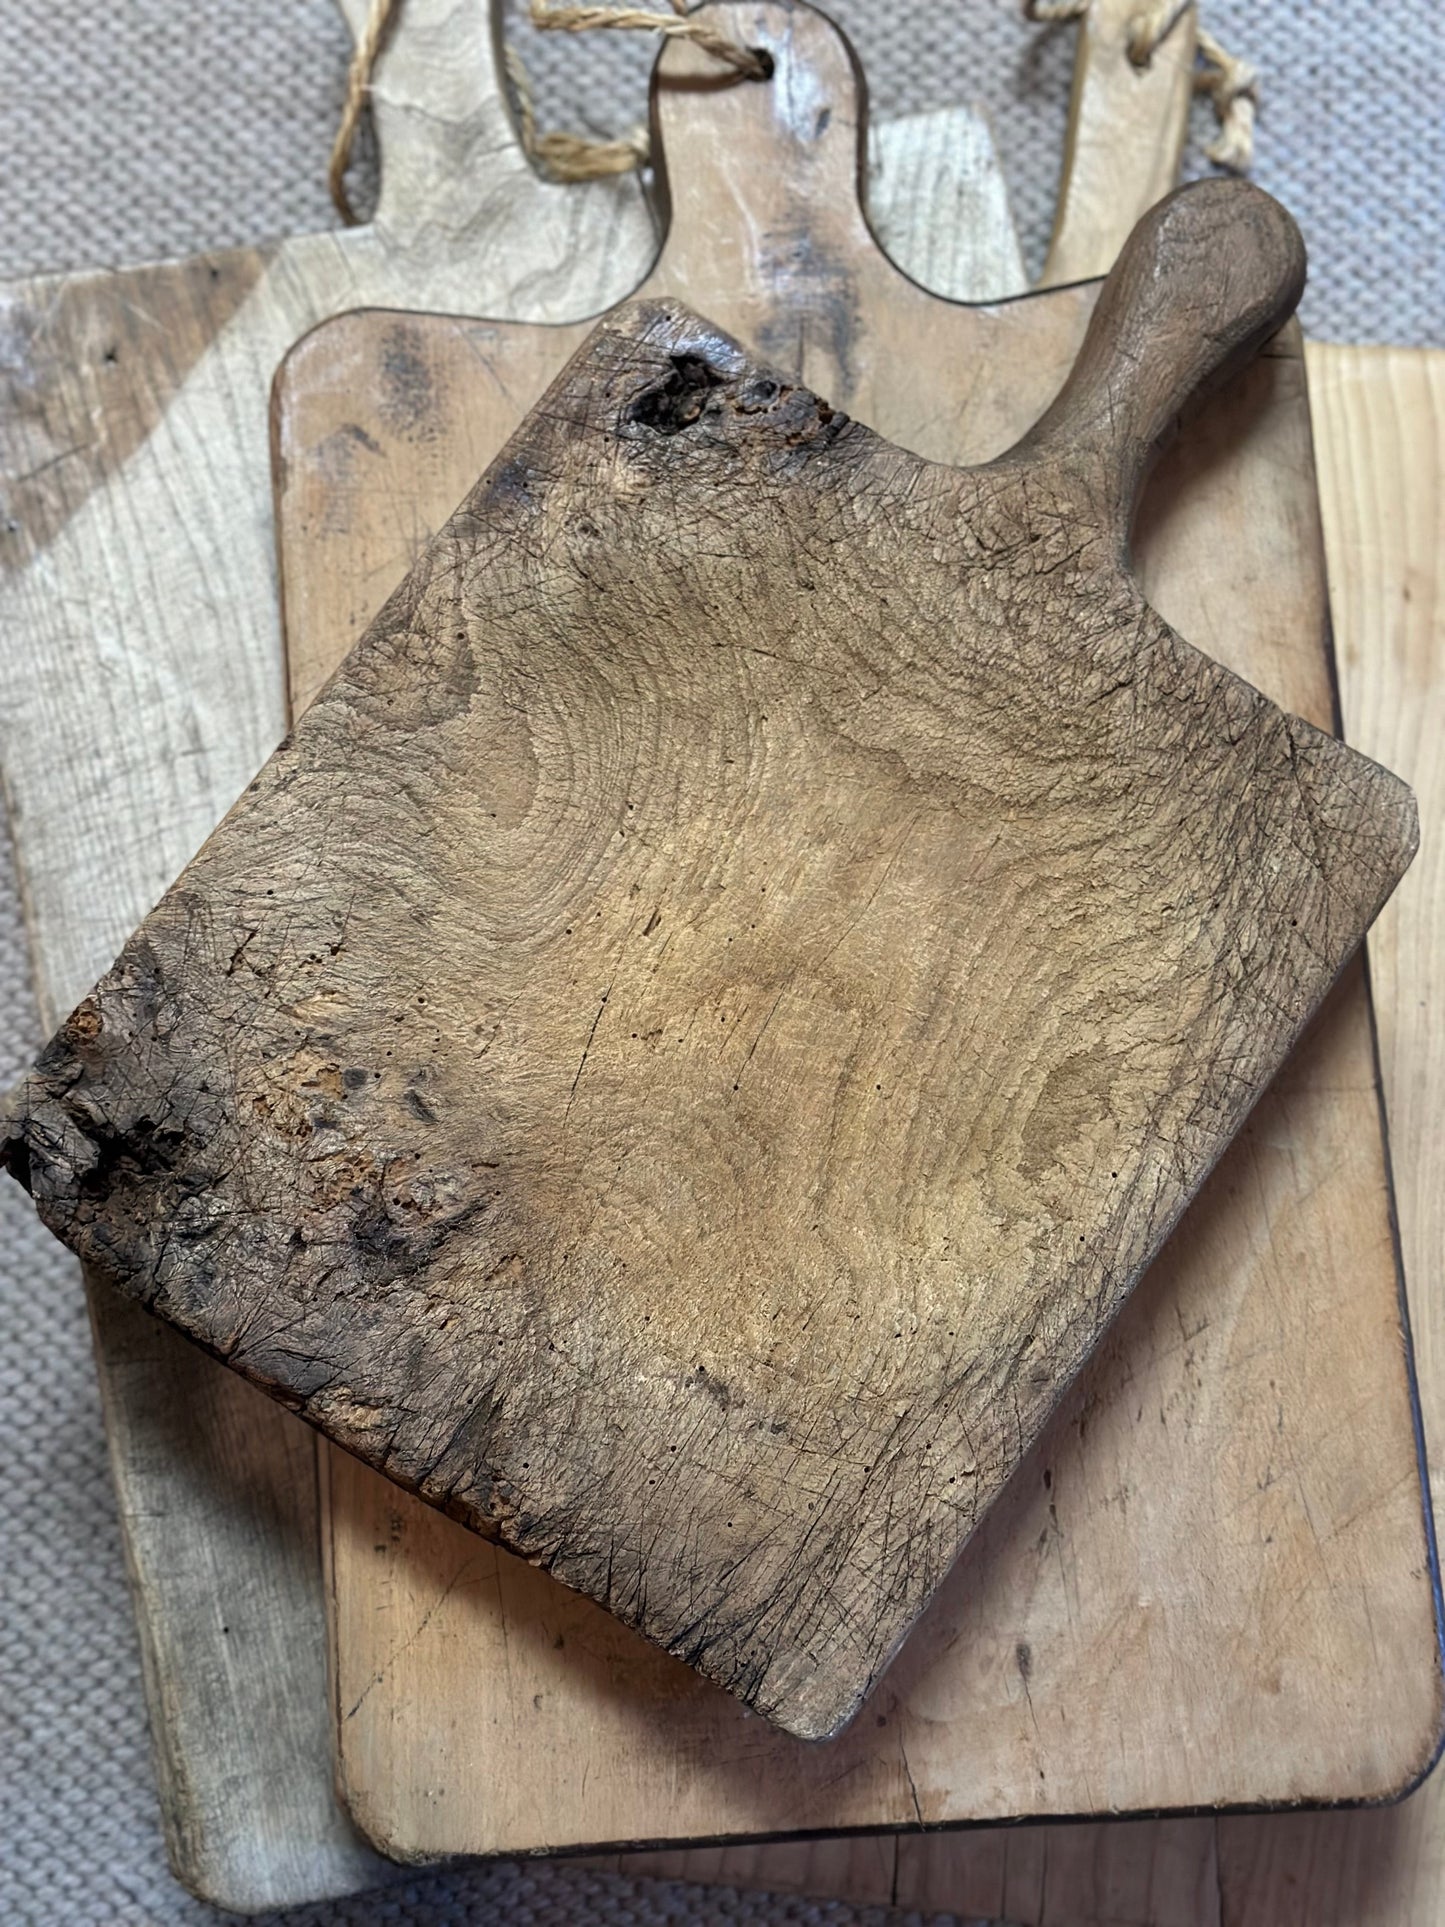 Antique Provençal Bread Board - Small